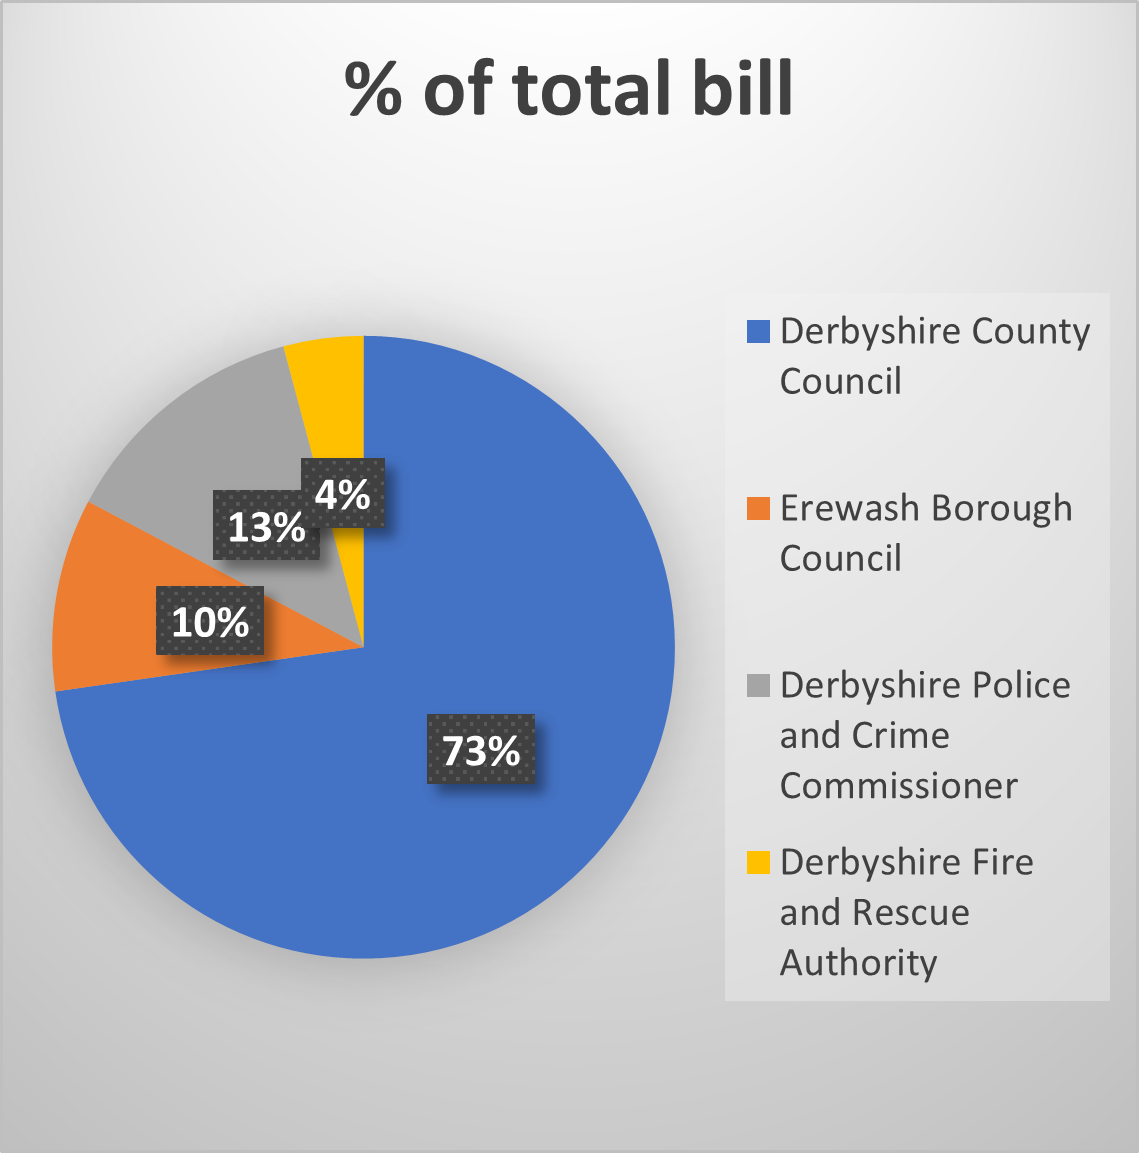 Pie chart shows percentage of total council tax bill: 73% Derbyshire County Council, 13% Derbyshire Police and Crim Commissioner, 10% Erewash Borough Council, 4% Derbyshire Fire & Rescue Service.